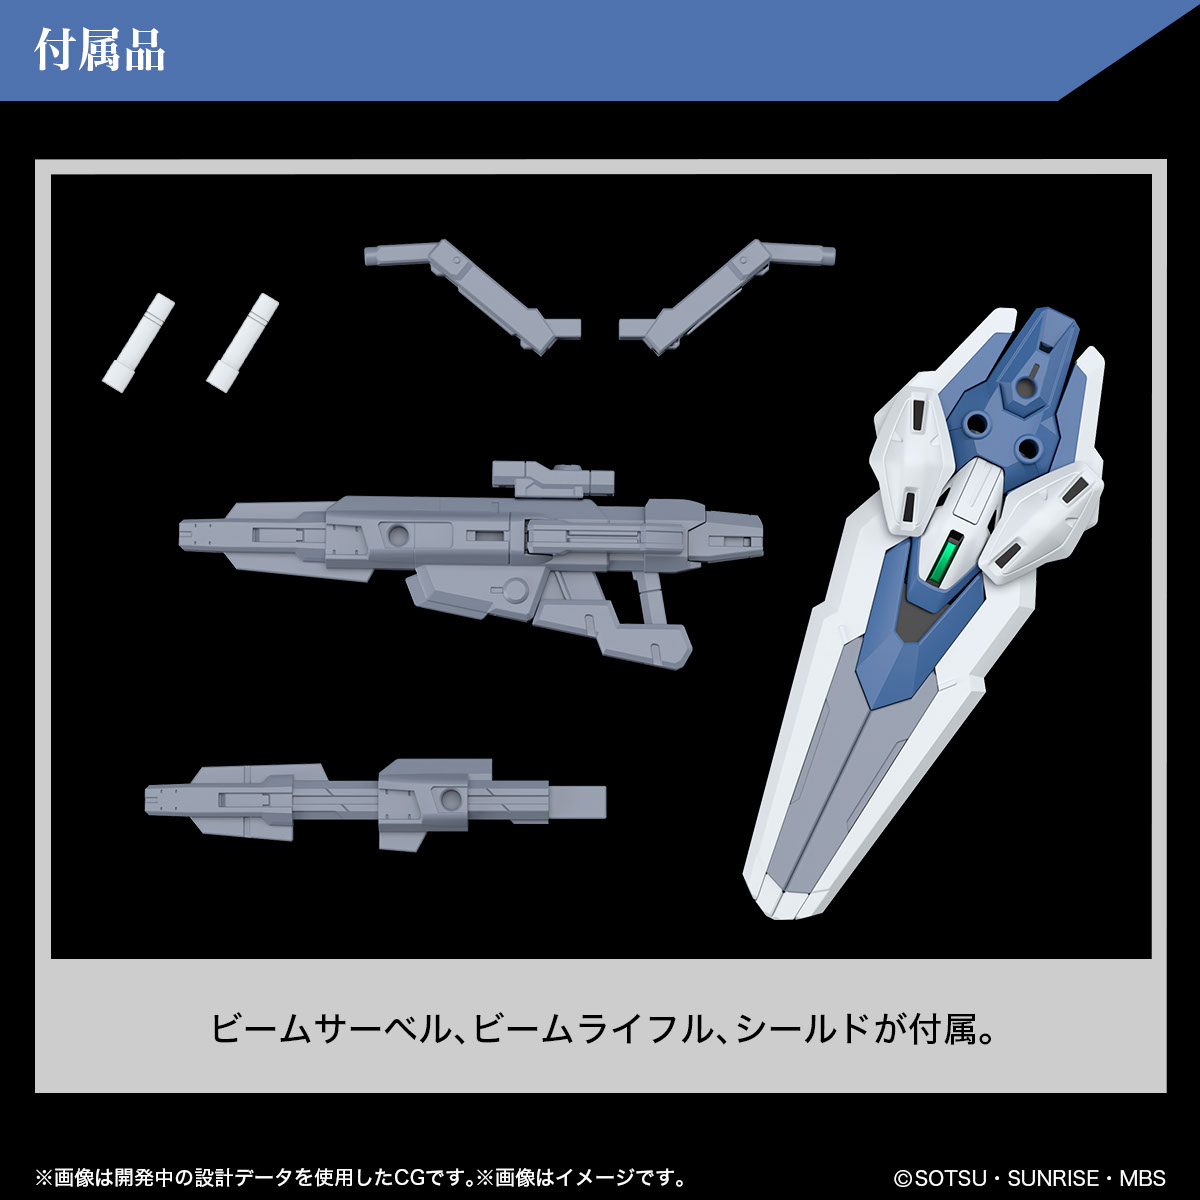 XVX-016RN Gundam Aerial Rebuild GUNDAM THE WITCH FROM MERCURY HG 1/144 Scale Model Kit Figure GUNPLA BANDAI